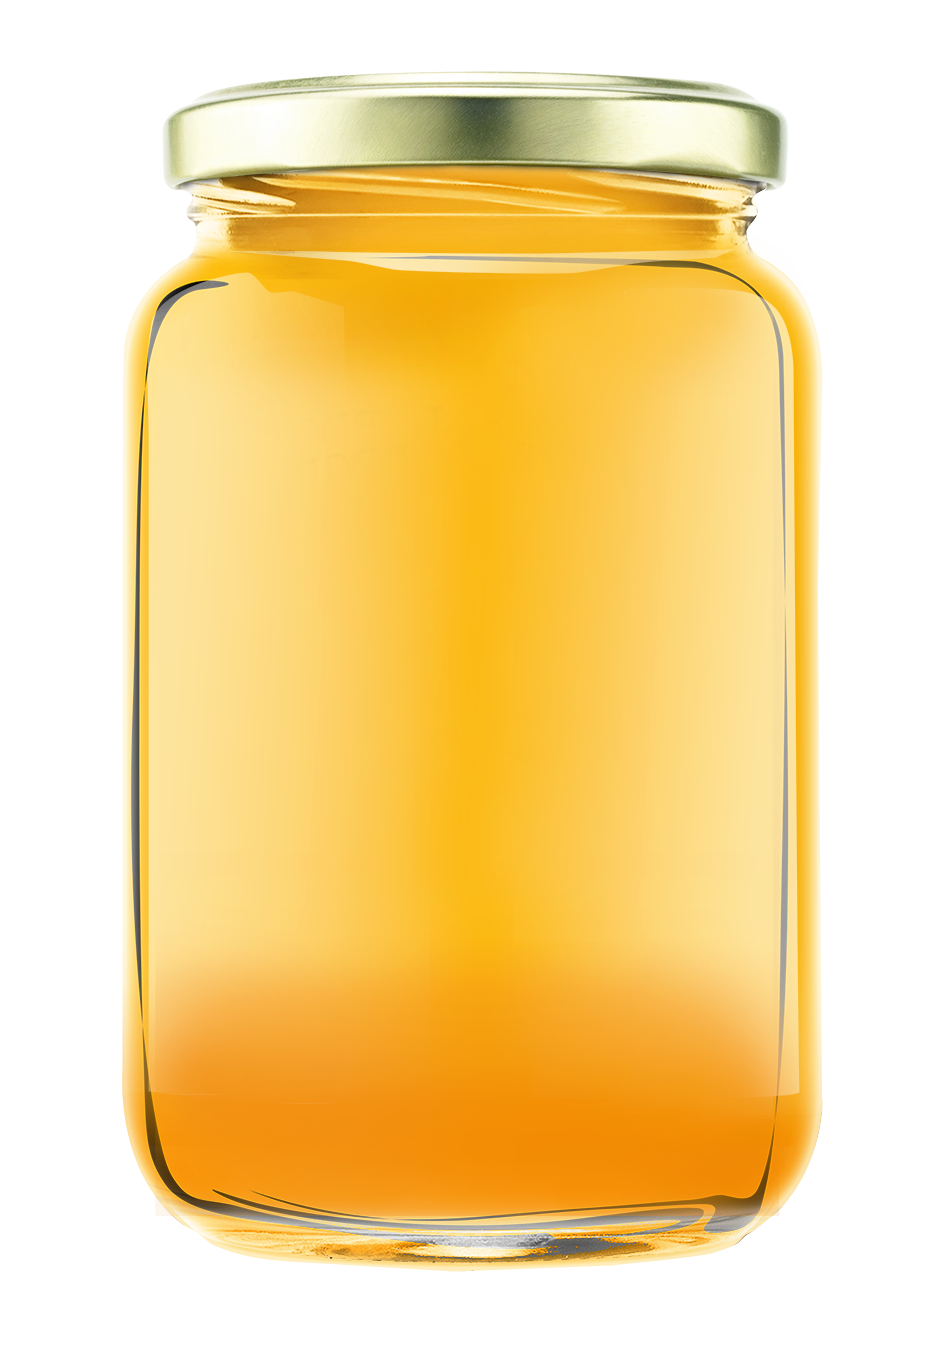 Download Honey Jar Png Image Purepng Free Transparent Cc0 Png Image Library Yellowimages Mockups